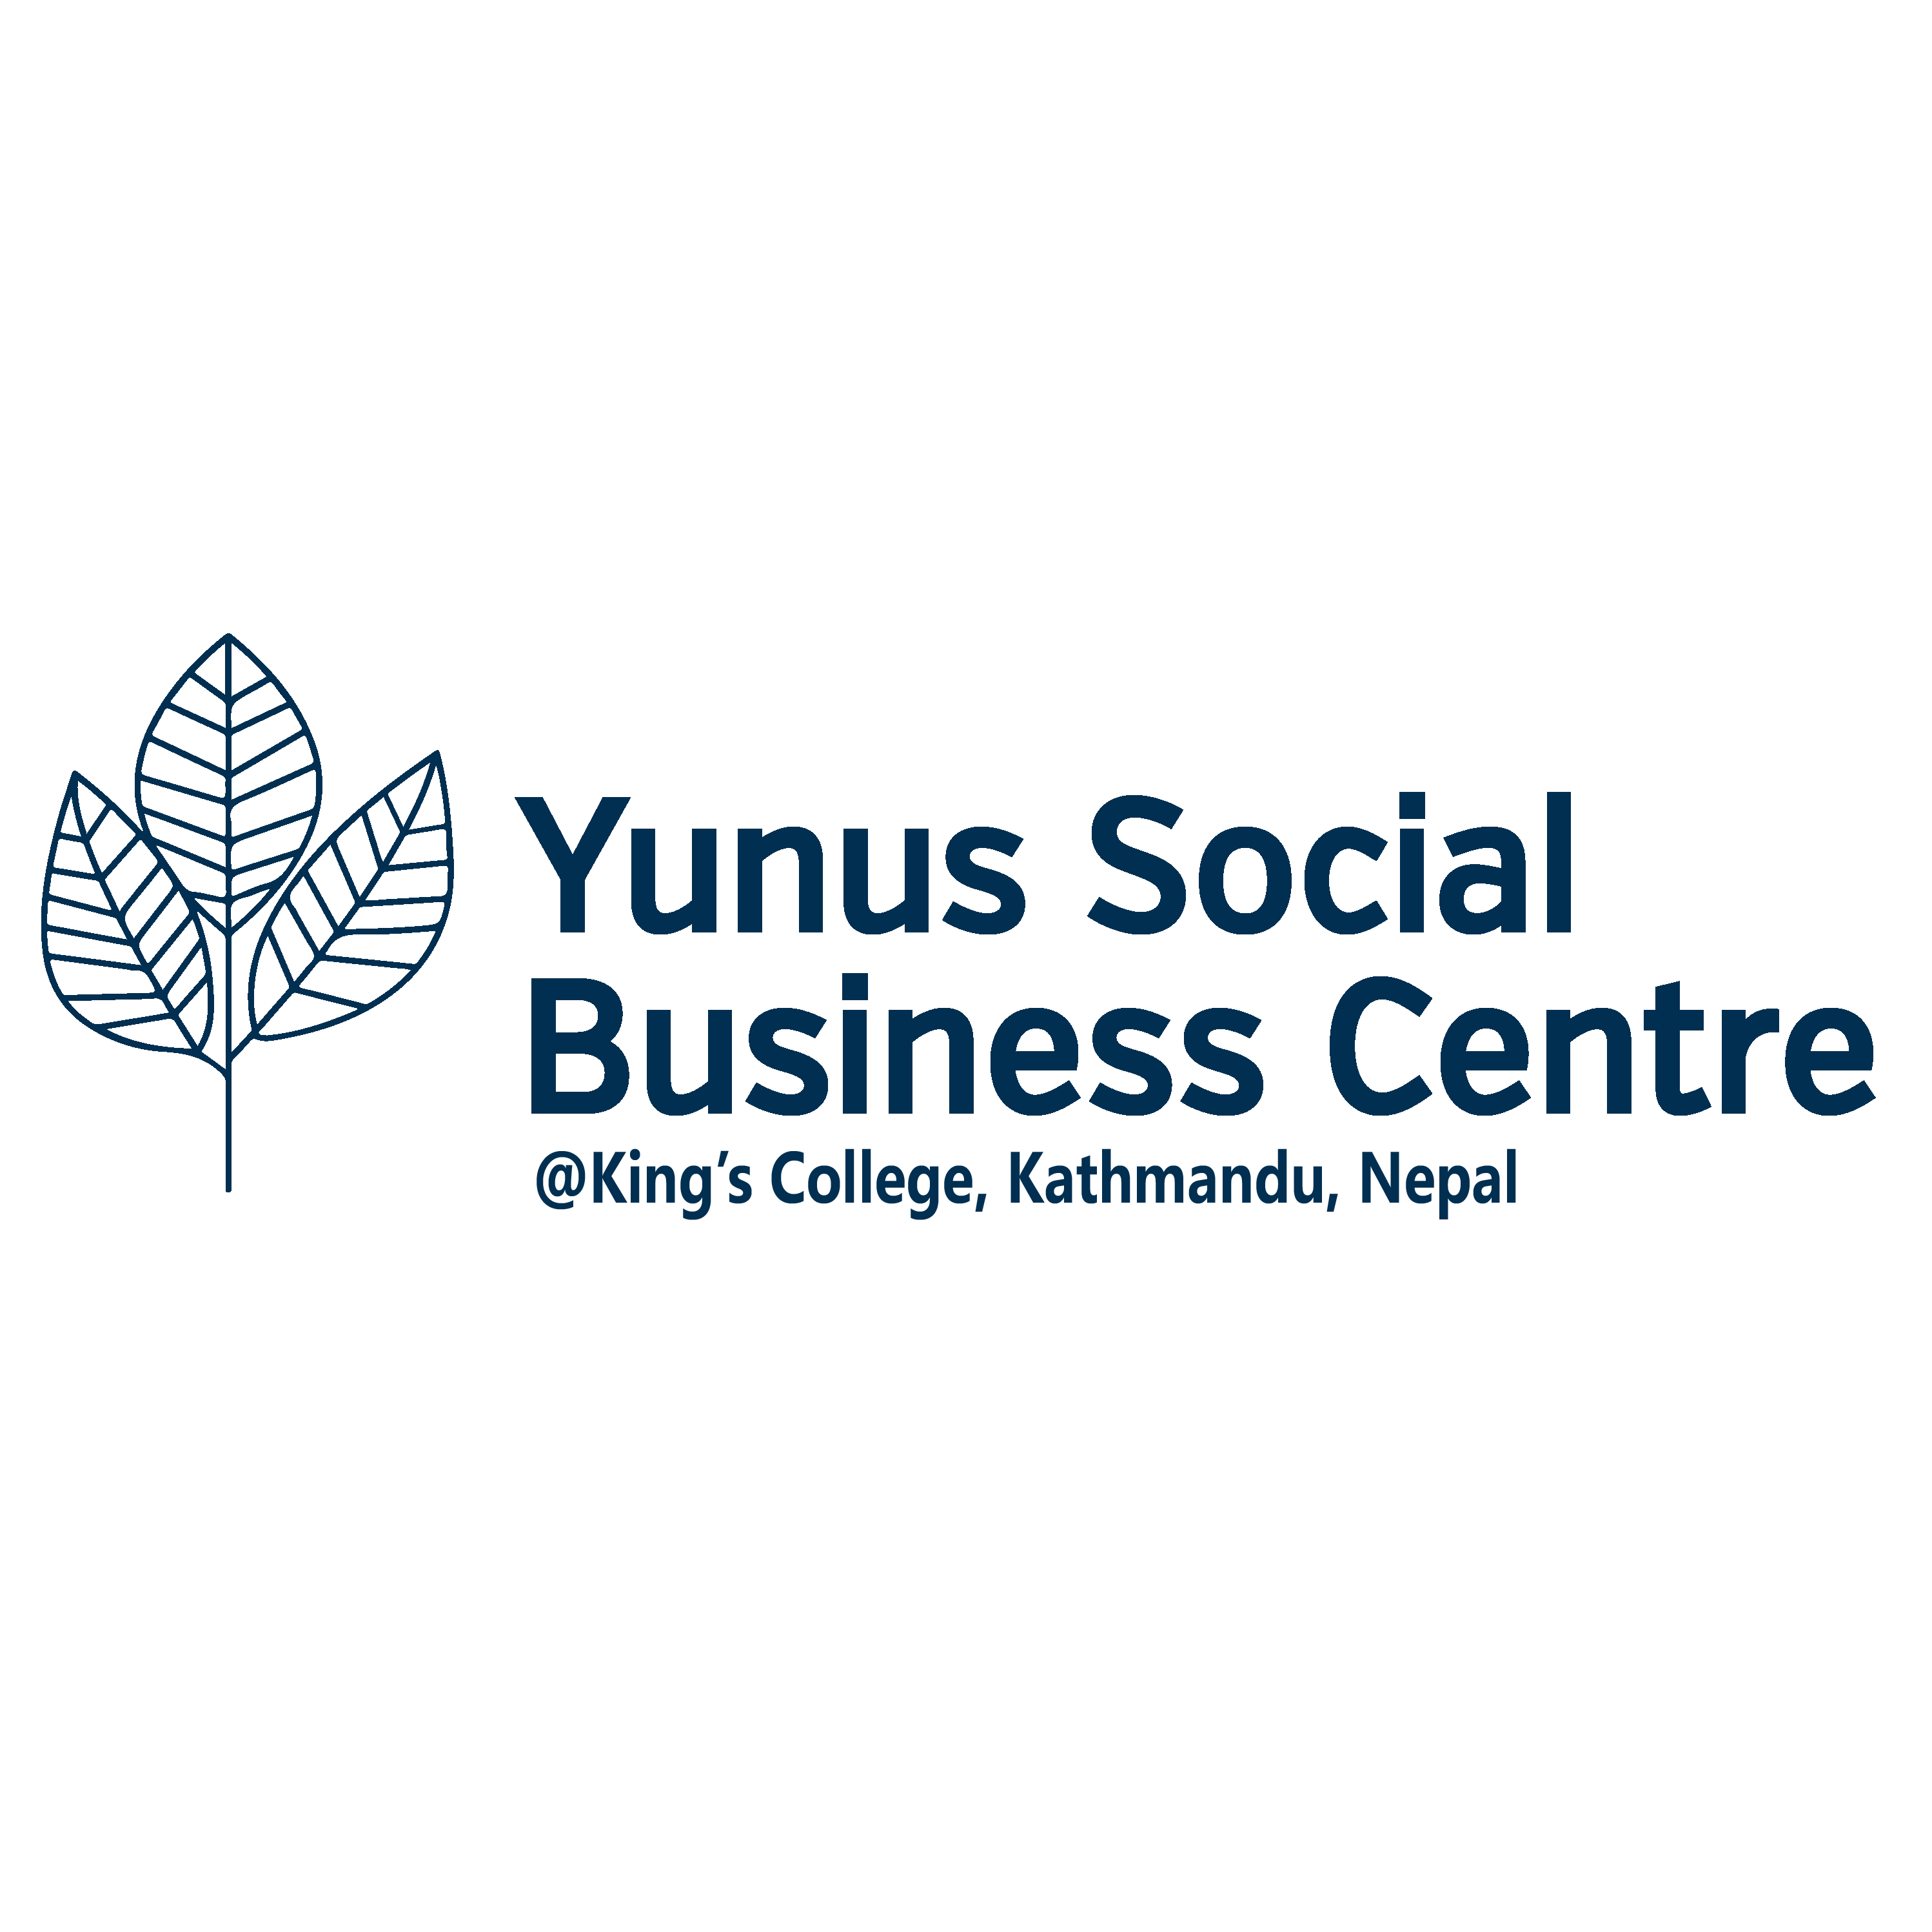 Yunus Social Business Centre at King's College Kathmandu Nepal 